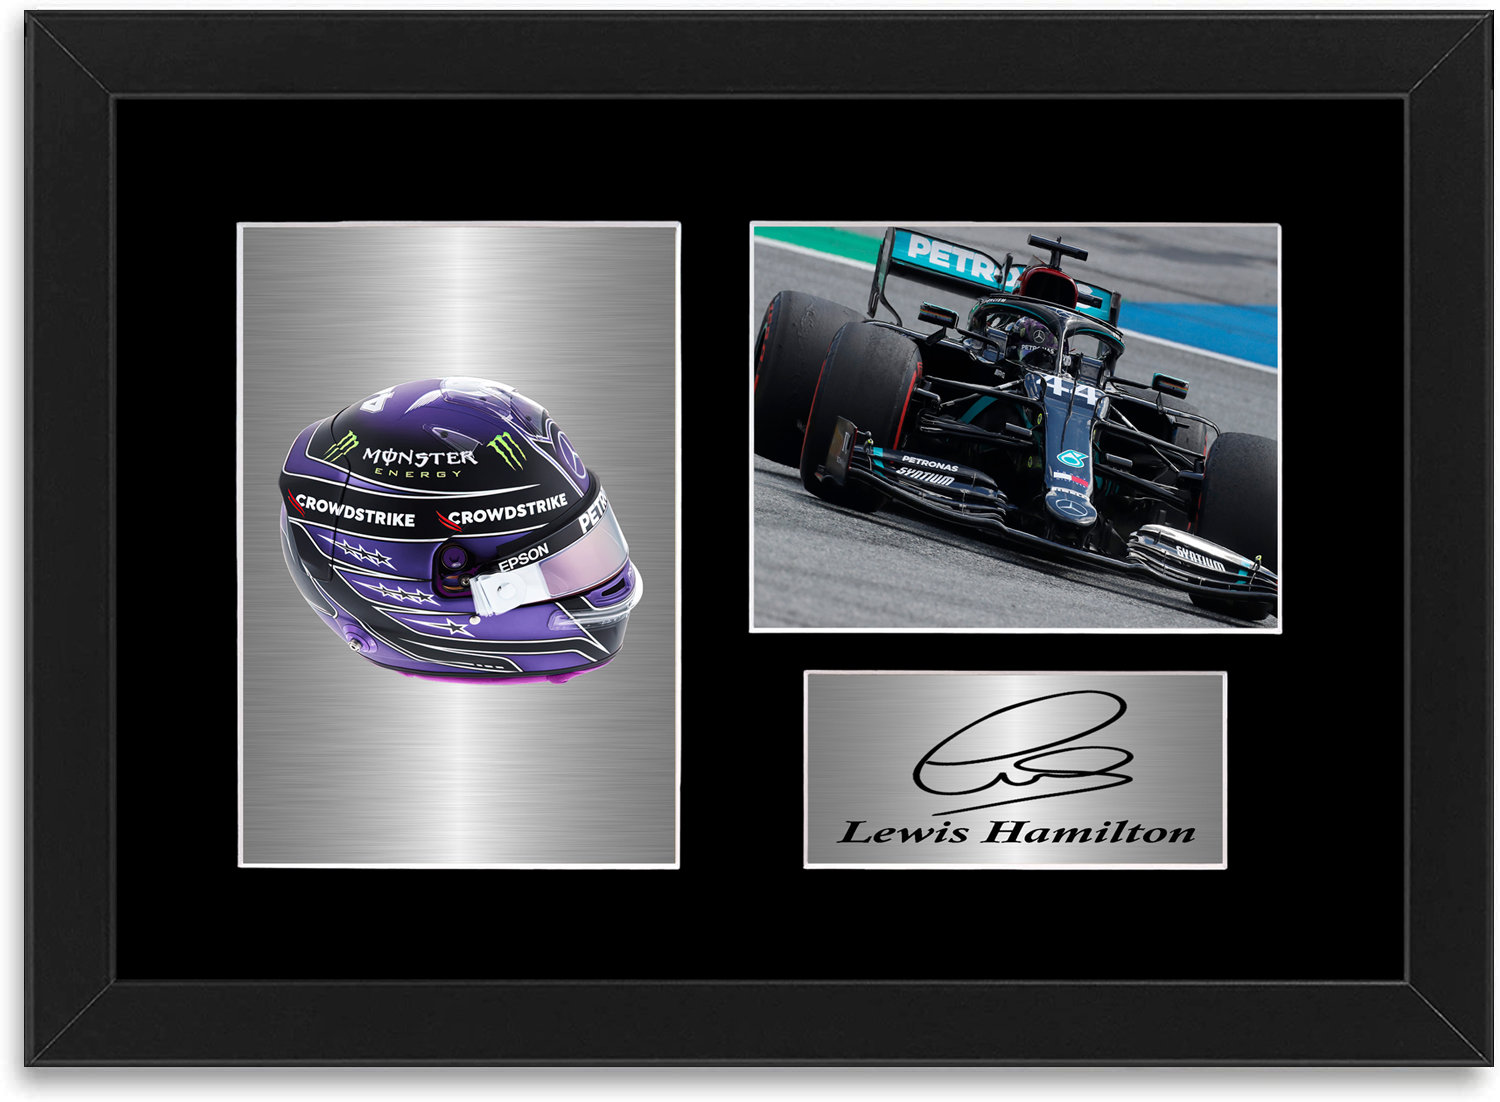 Lewis Hamilton Signed A4 Photo Print Autograph Formula 1 Driver 2021 F1 